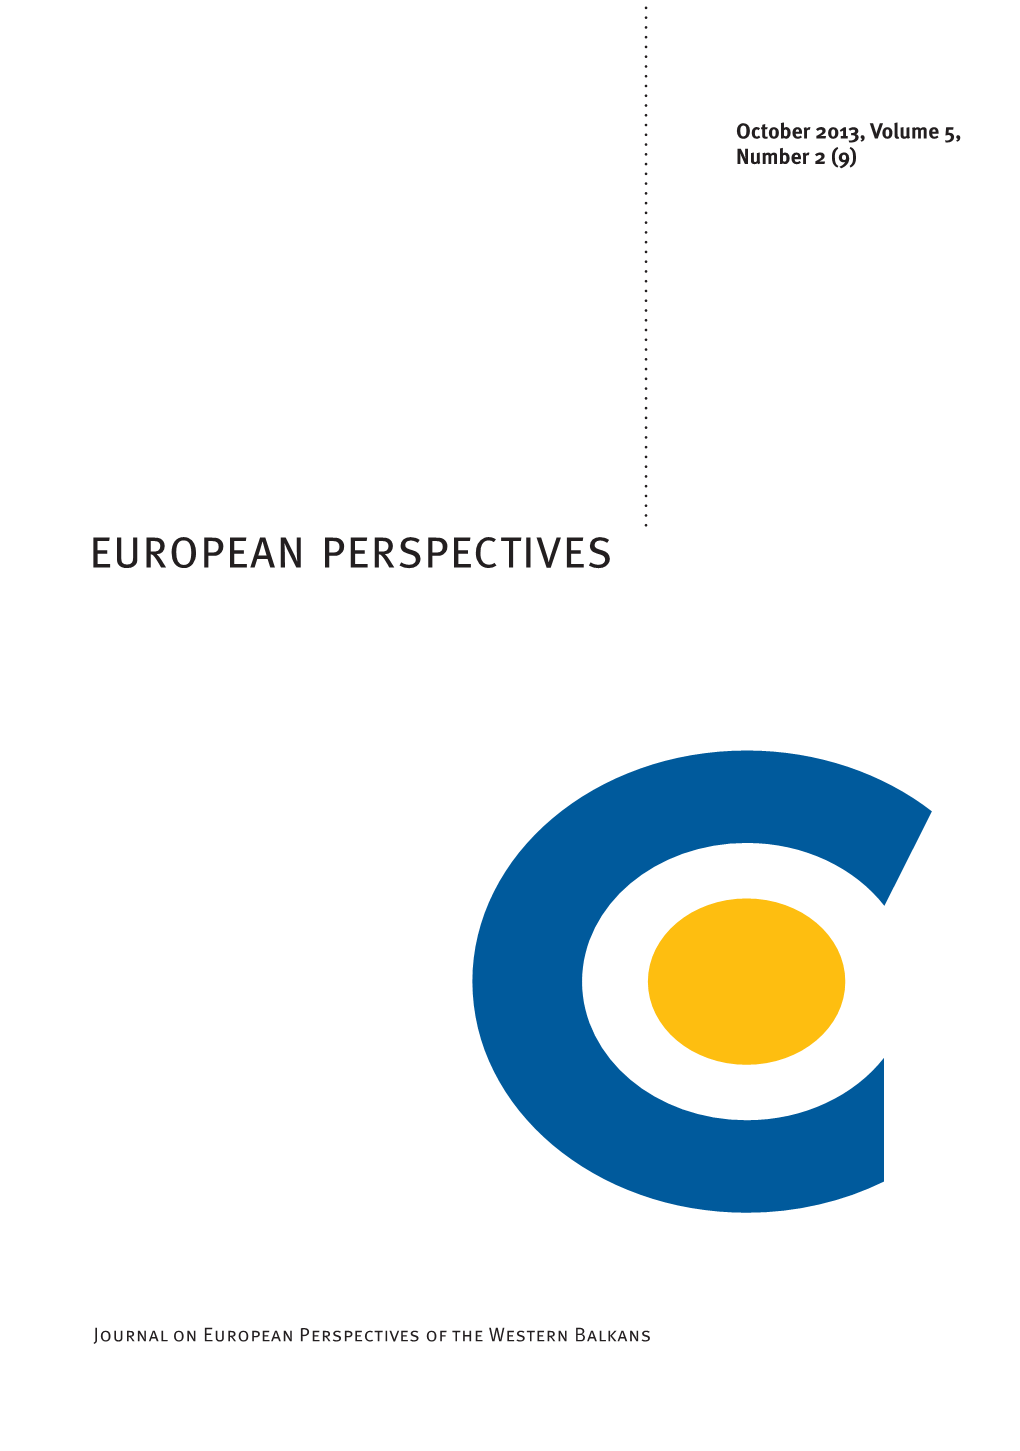 European Perspectives 2013, Volume 5, Number 2